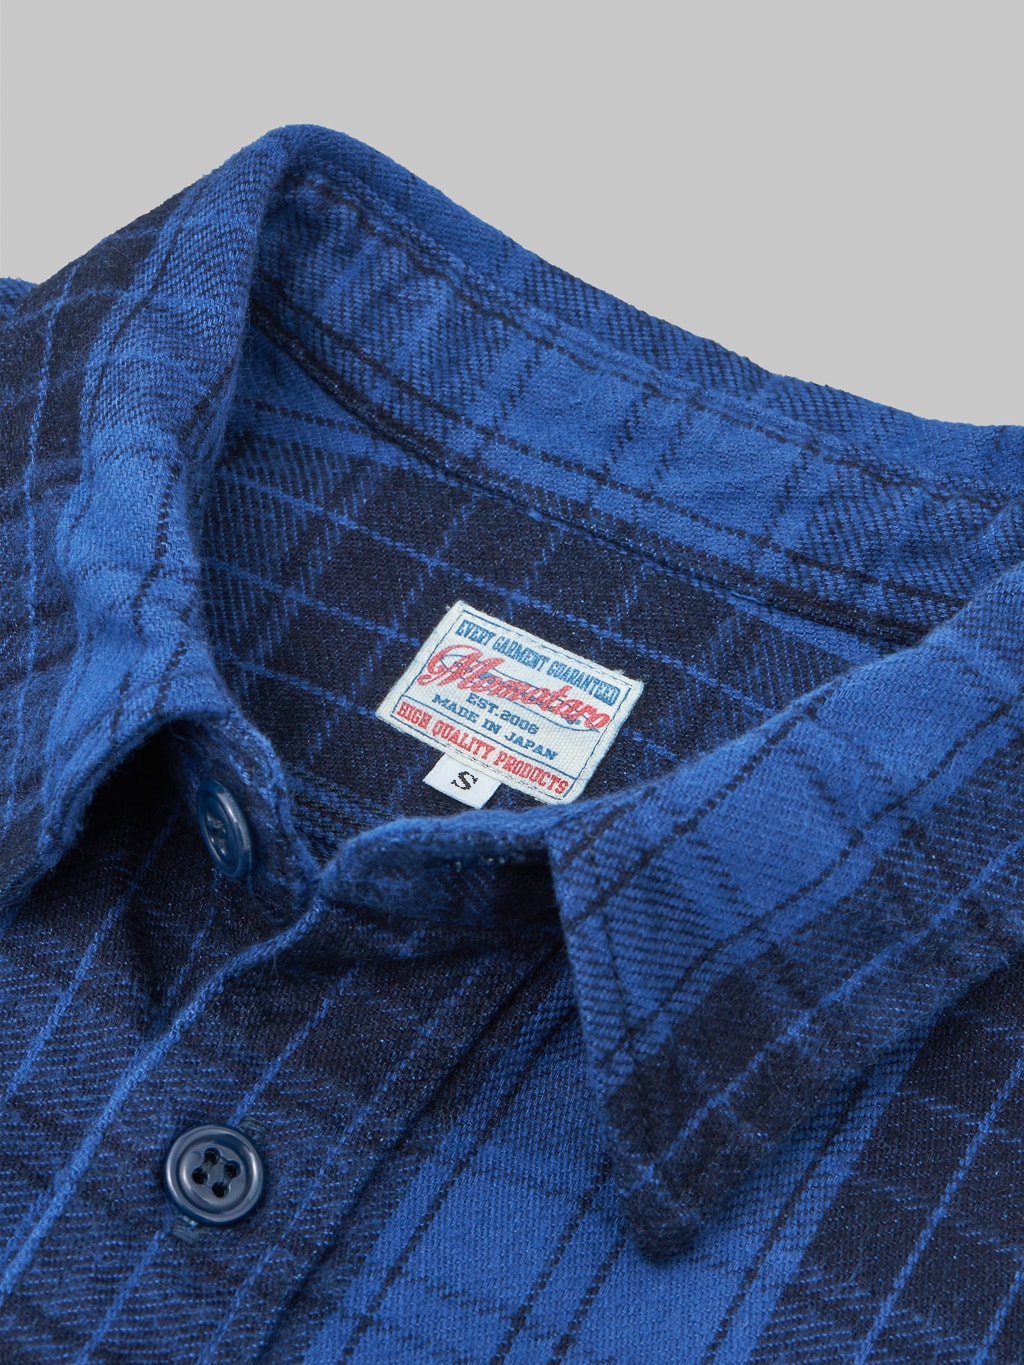 Momotaro original indigo twill check flannel shirt brand label